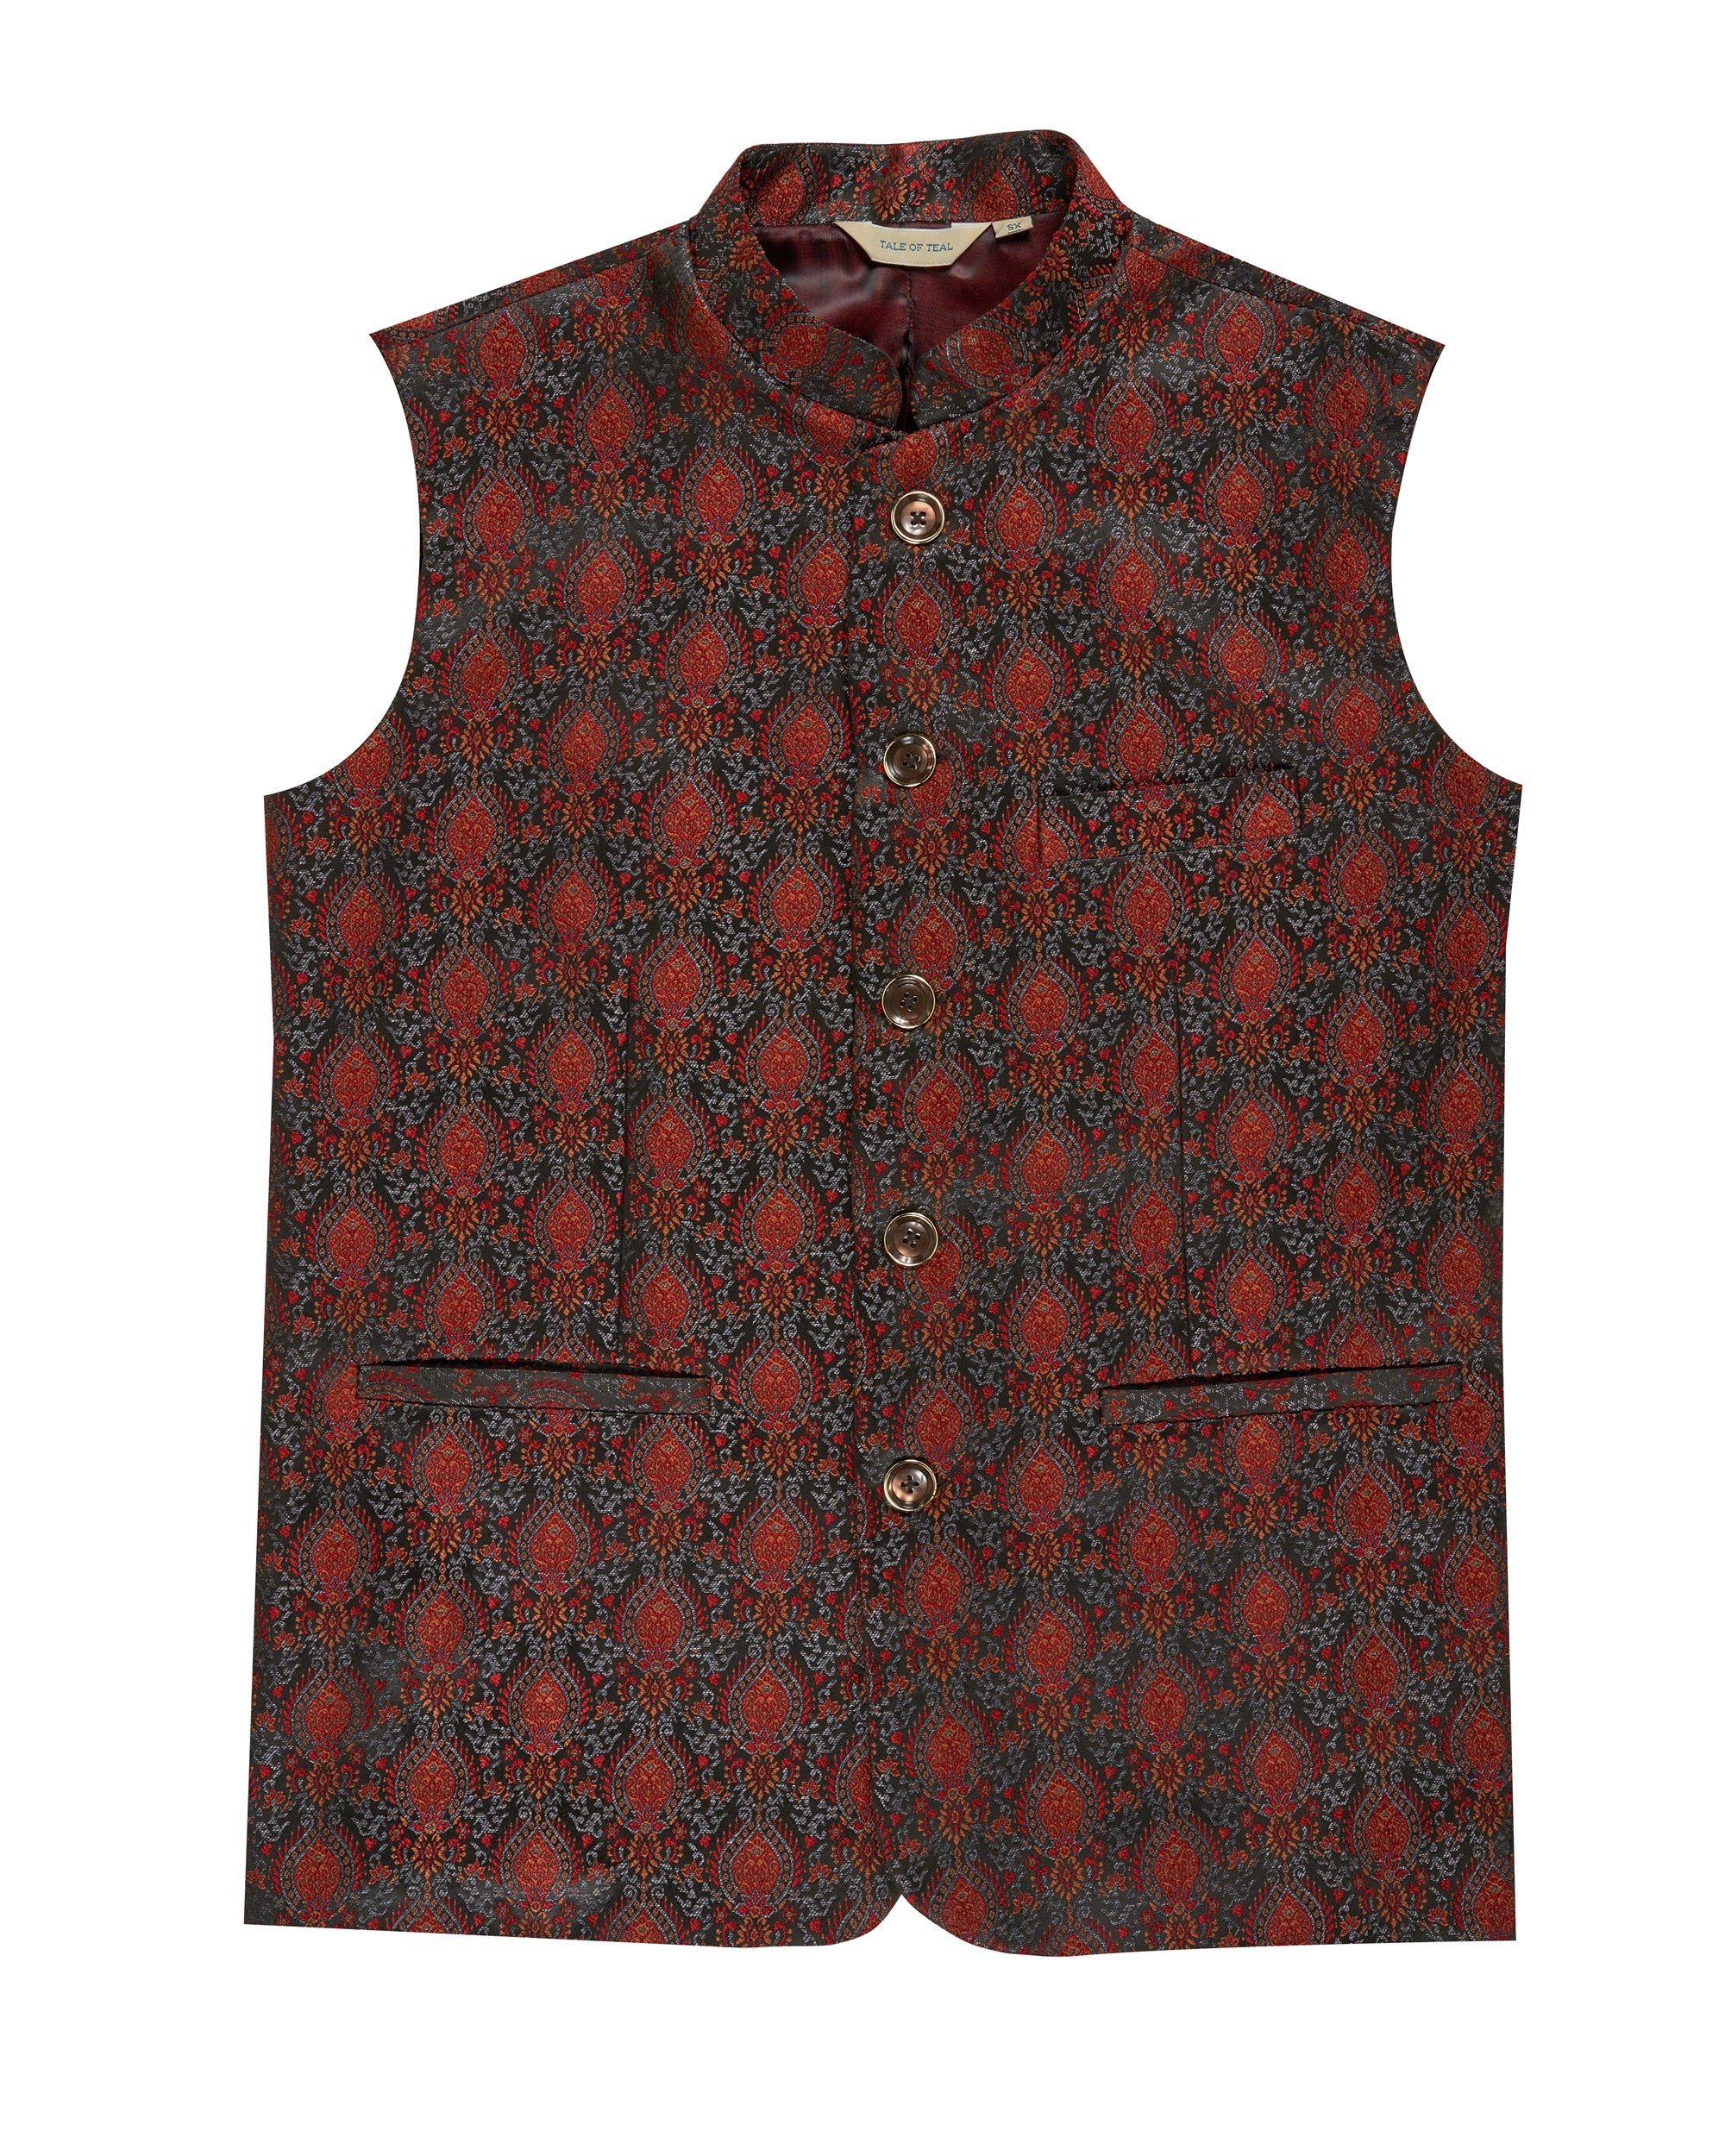 Tale of Teal Textured Patterned Jacquard Bundi Ethnic Waistcoat - Red & Black